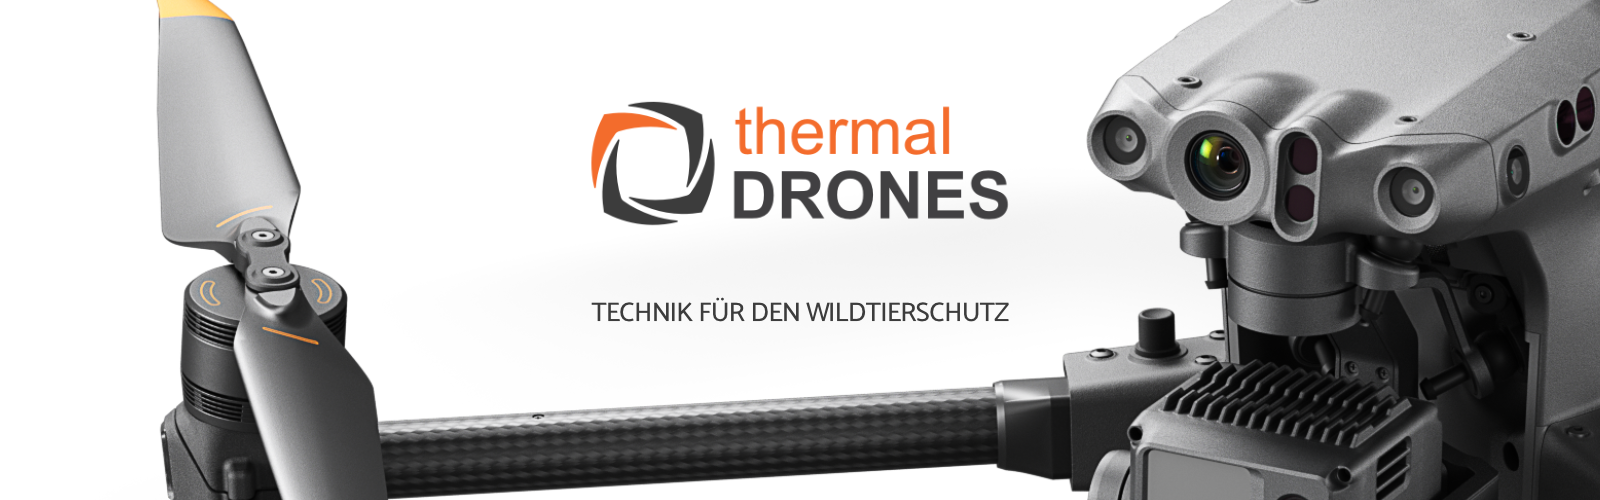 Thermal DRONES Logobild mit Drohne